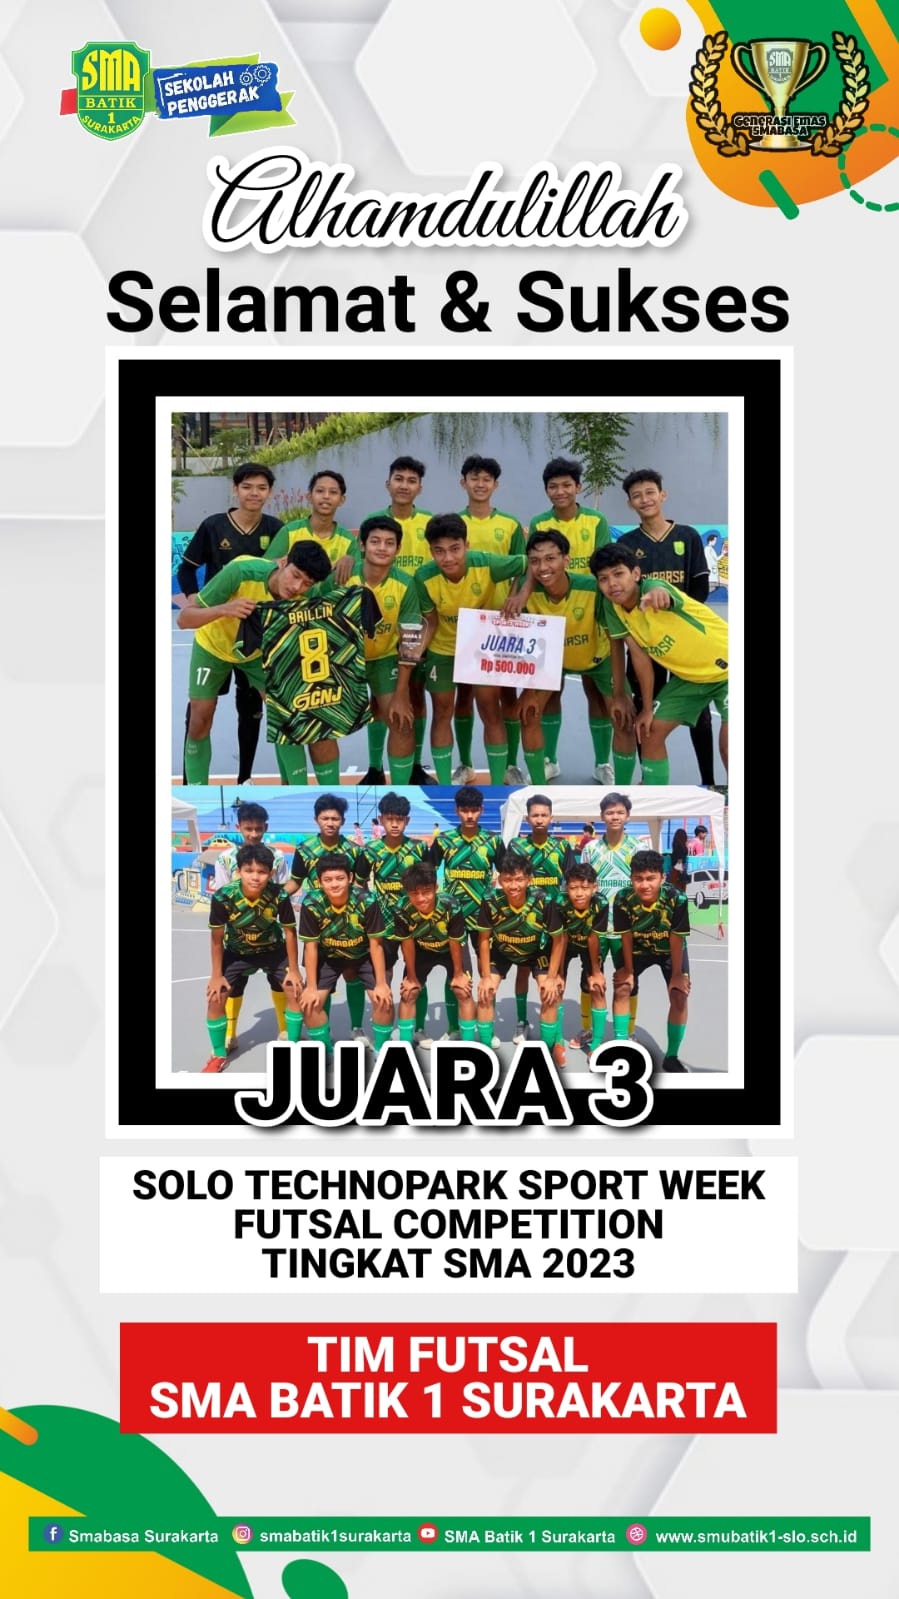 Juara 3. Solo Technopark Futsal Competition 2023